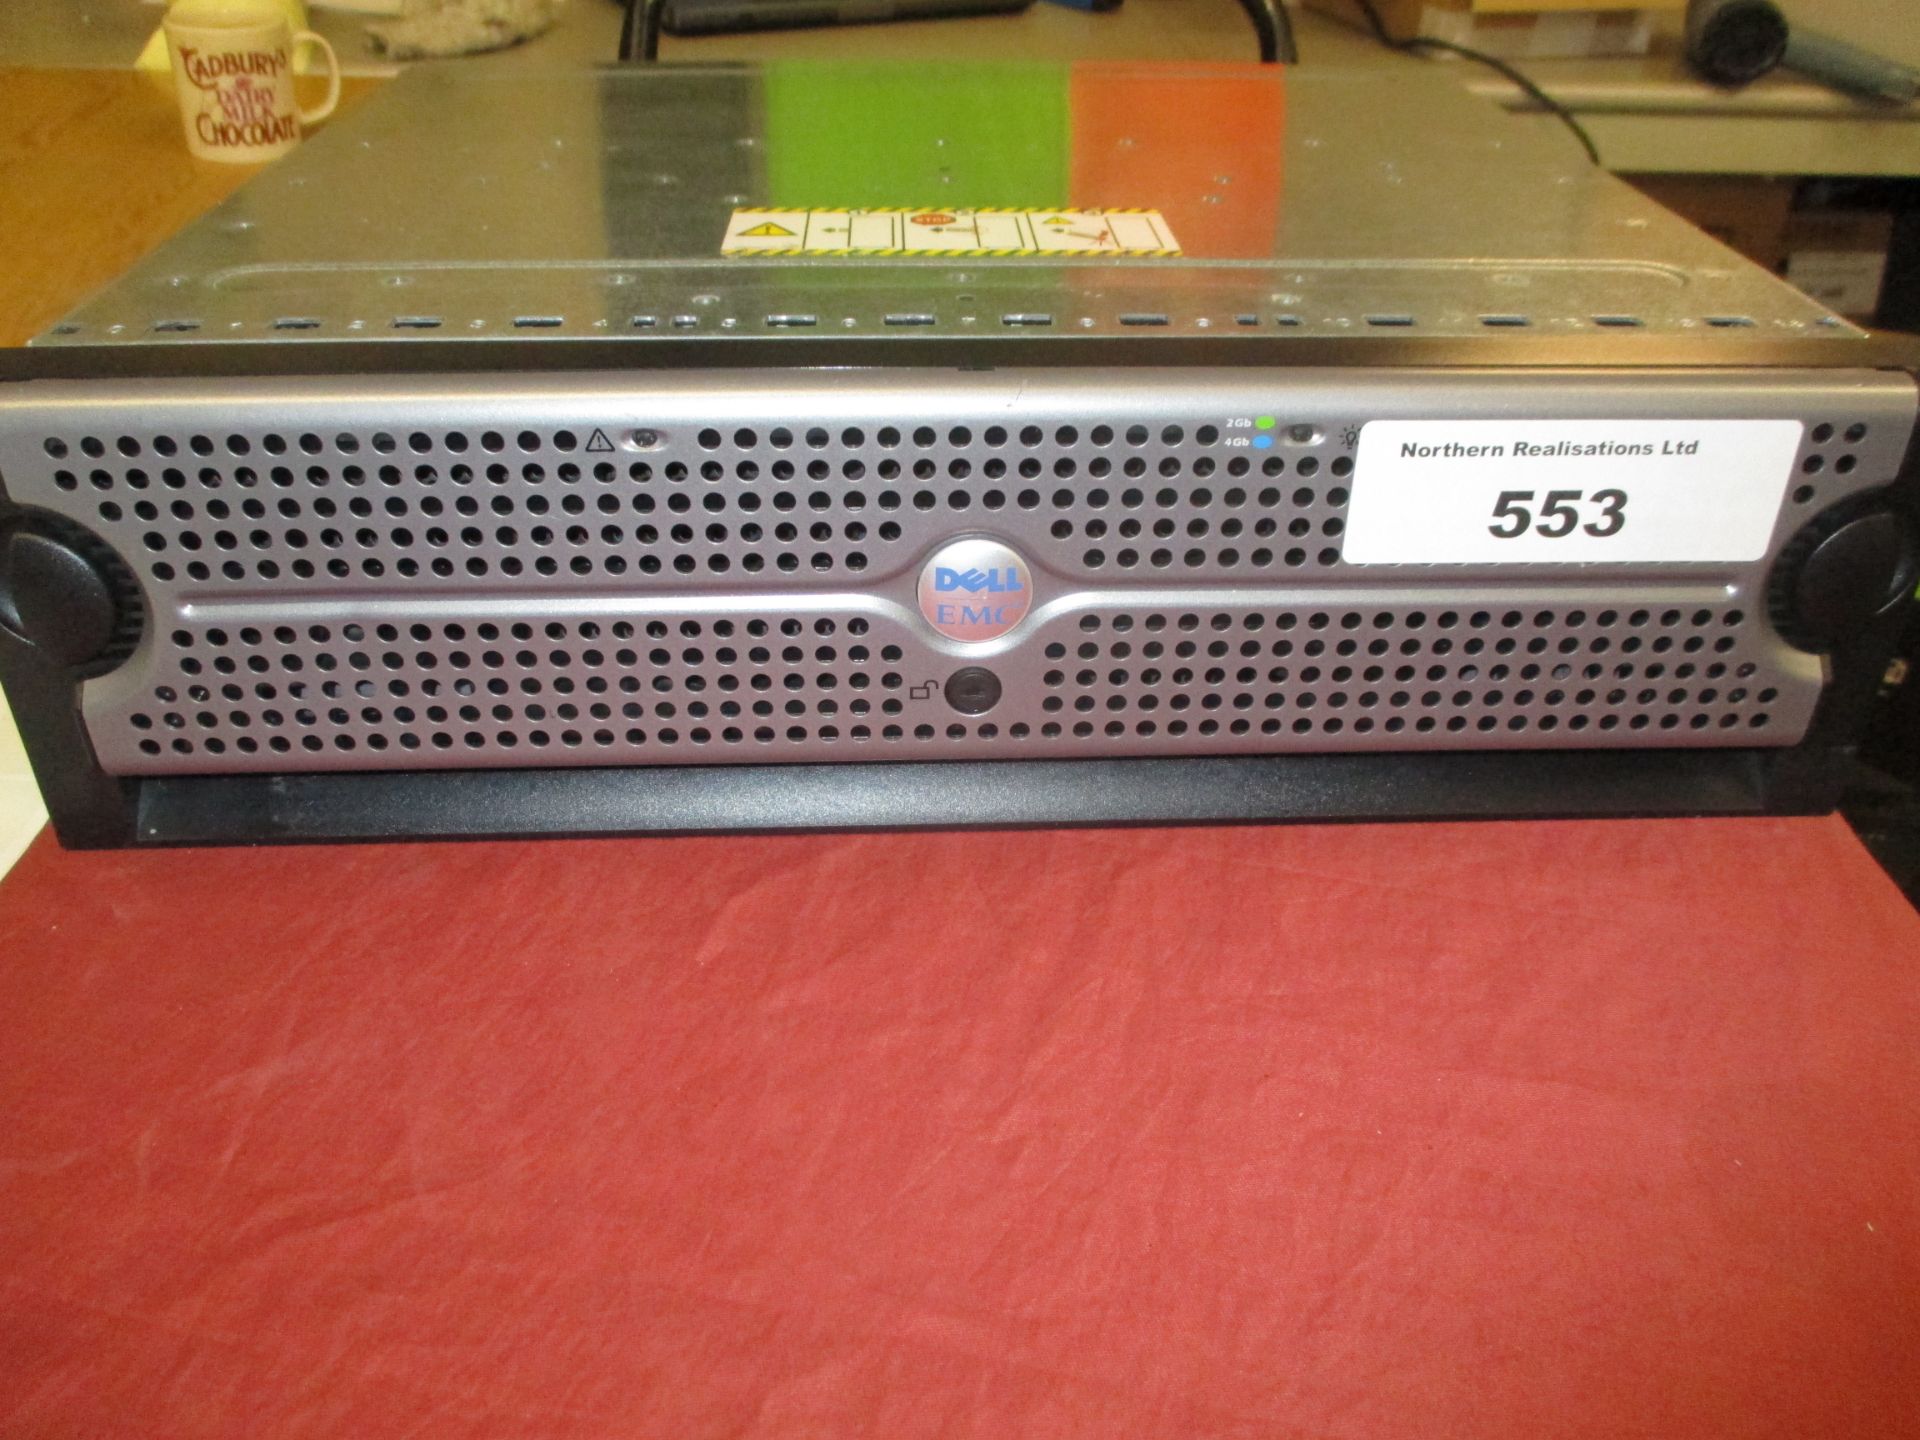 Dell EMC Drive array KTN-STL4 - 2 x 4GB Controllers Fibre Channel FC & 2 x PSU. COMPLETE WITH